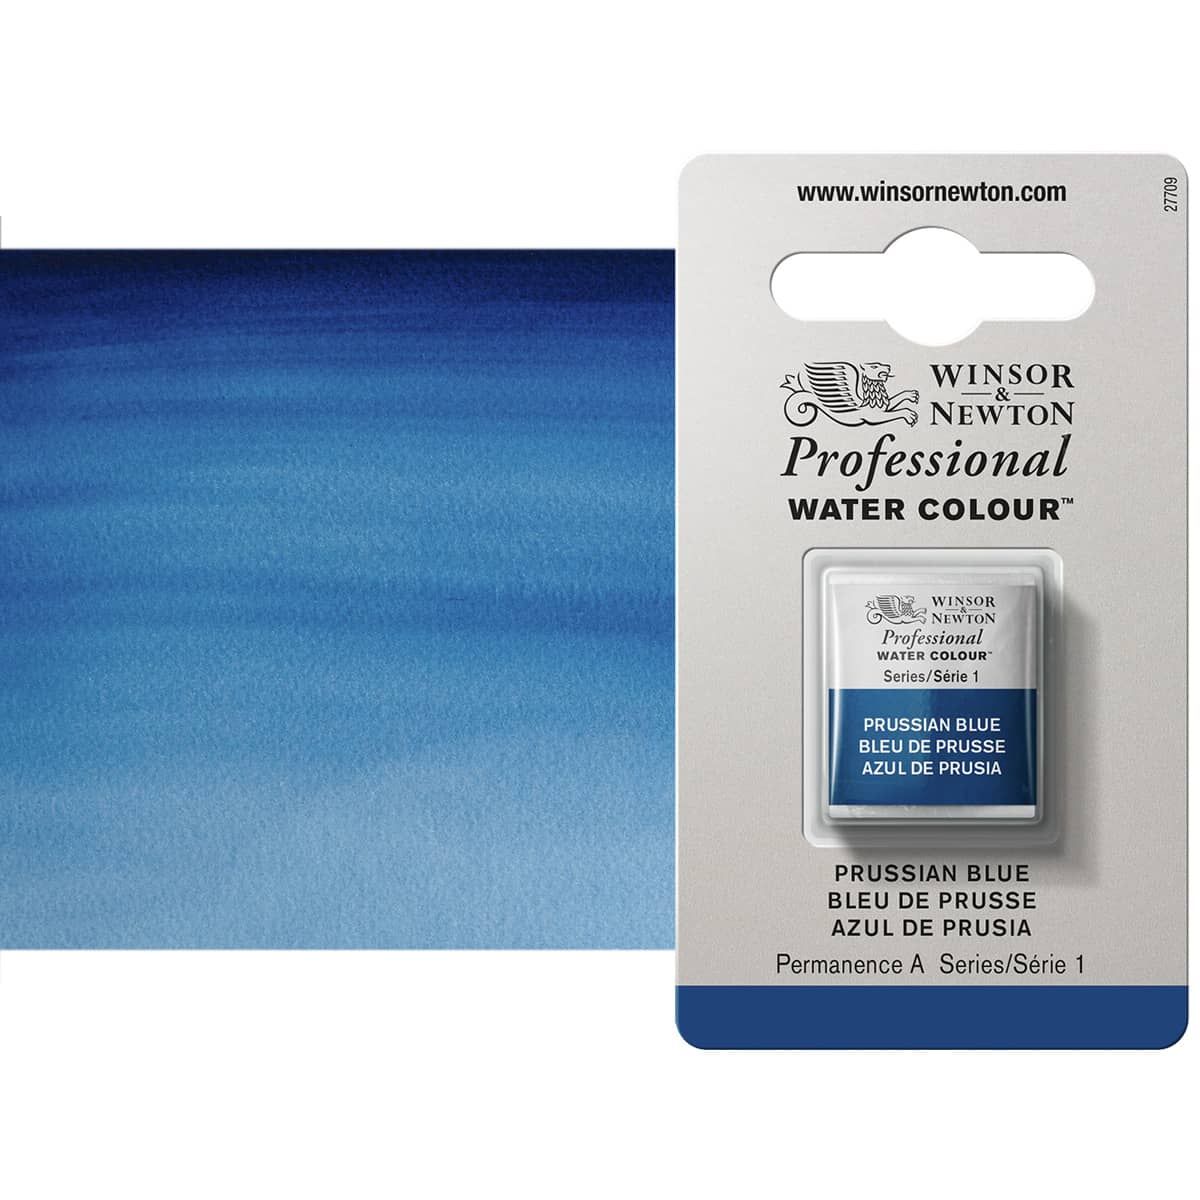 Winsor & Newton Professional Watercolor Half Pan - Cobalt Turquoise Light